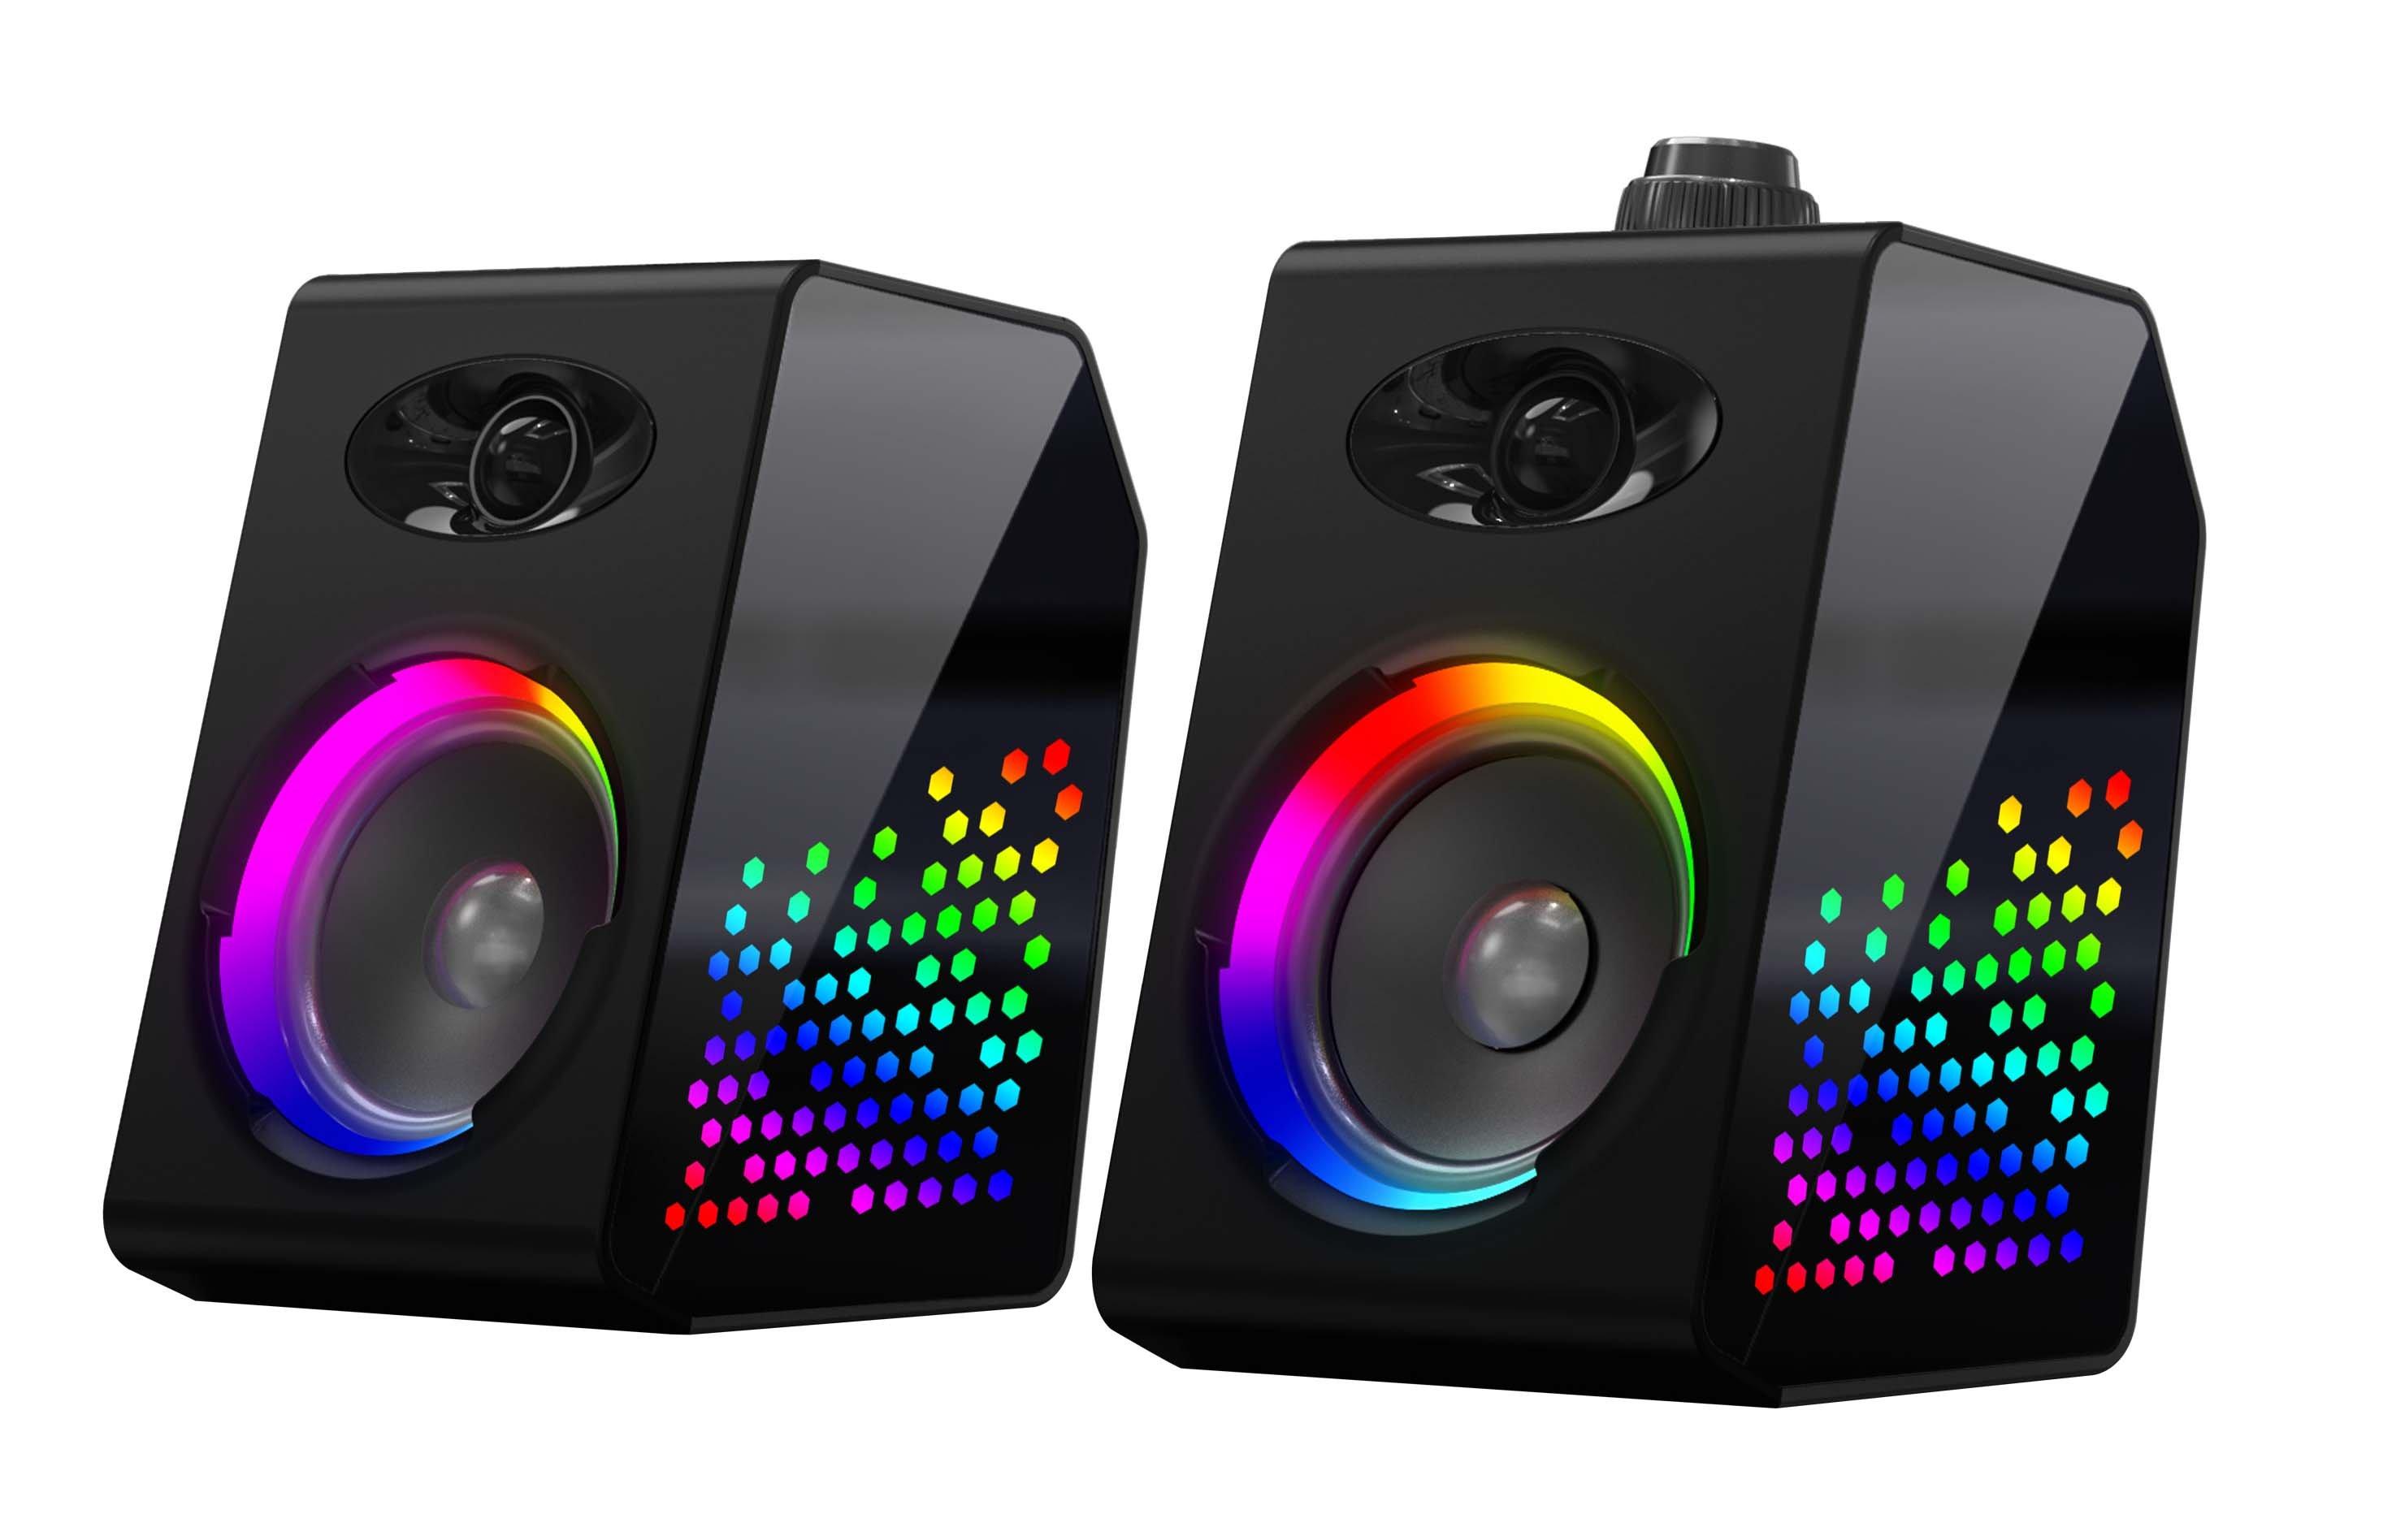 https://media.gamestop.com/i/gamestop/11184828/GameStop-Bluetooth-Gaming-Speakers-with-RGB-LED-Lighting